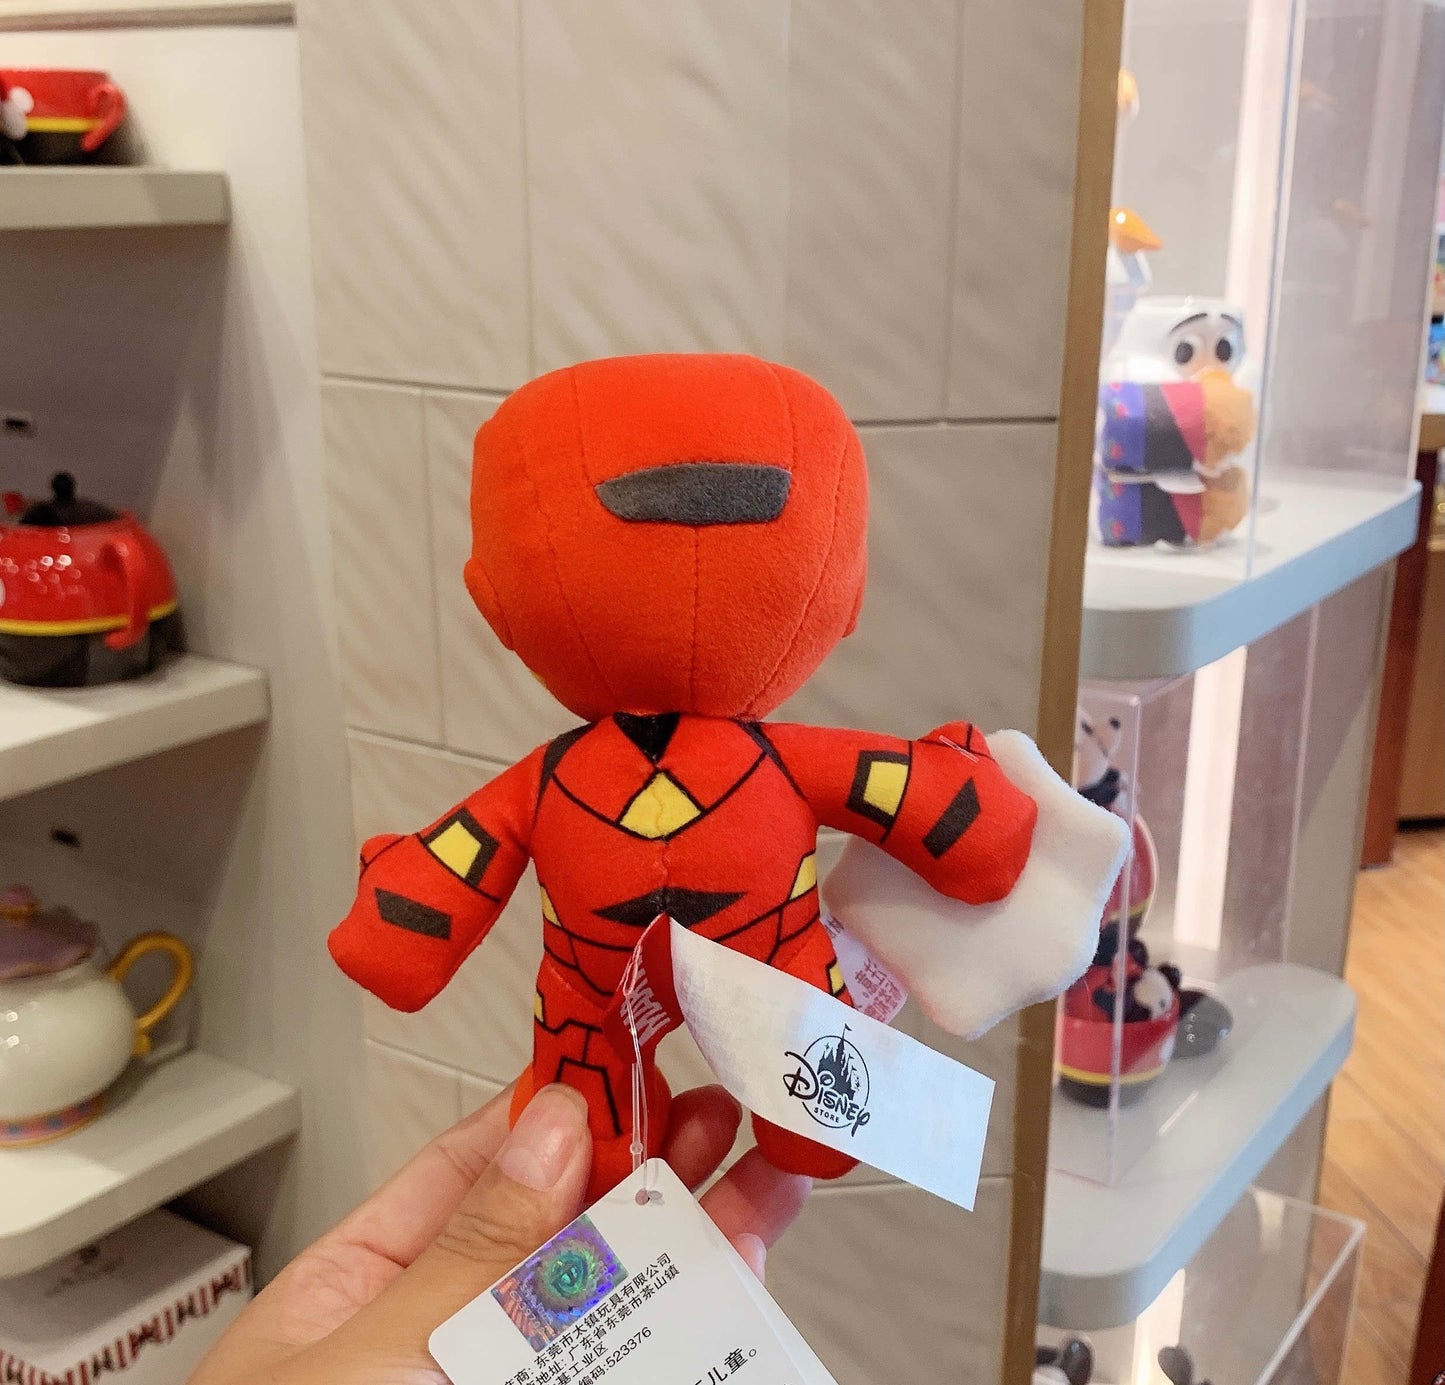 Authentic nuiMOs Plush Toy Marvel Ironman Figure Shanghai Disney Store Doll